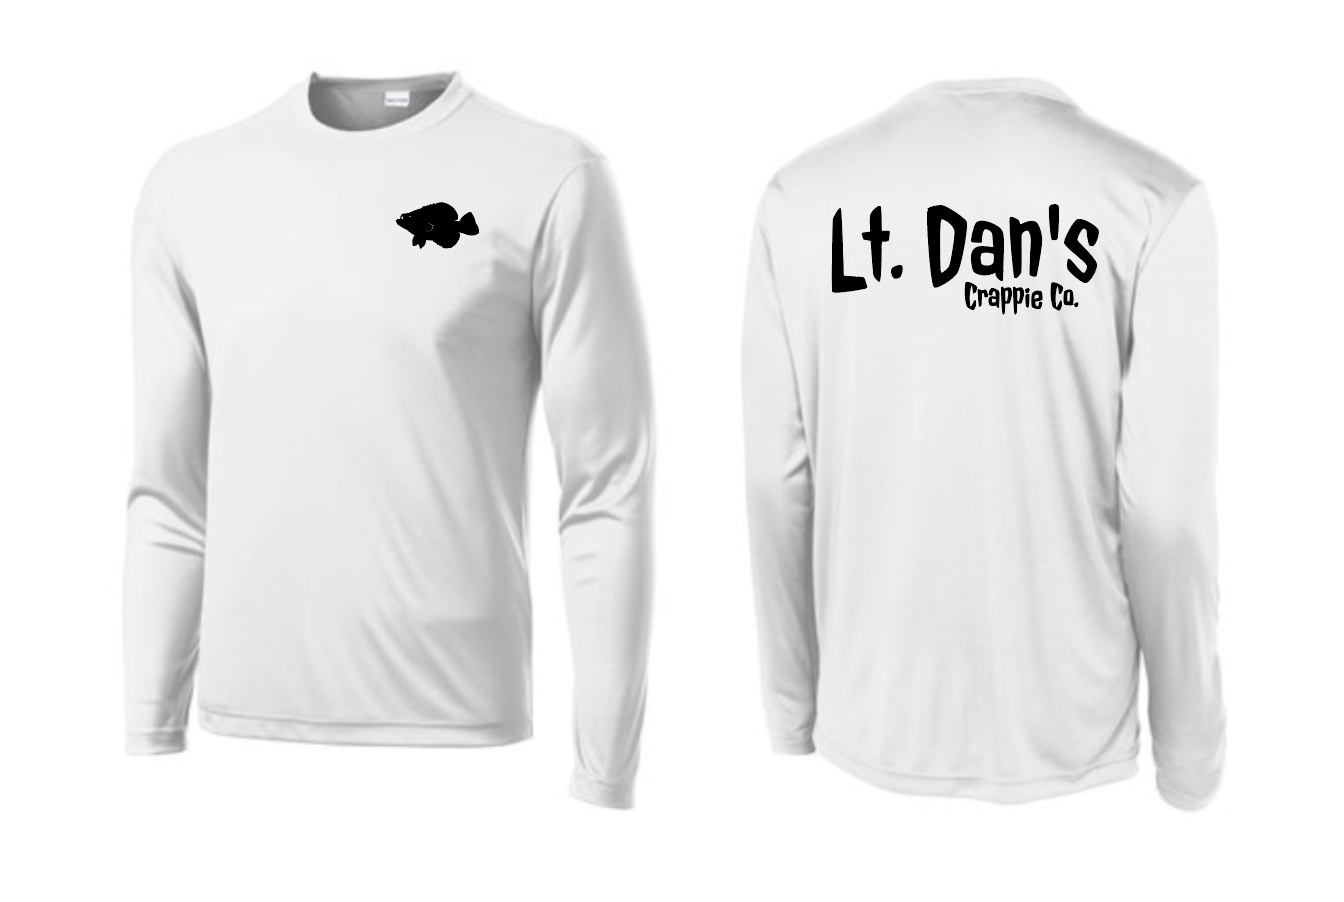 Lt Dan Fishing Guide Shirt